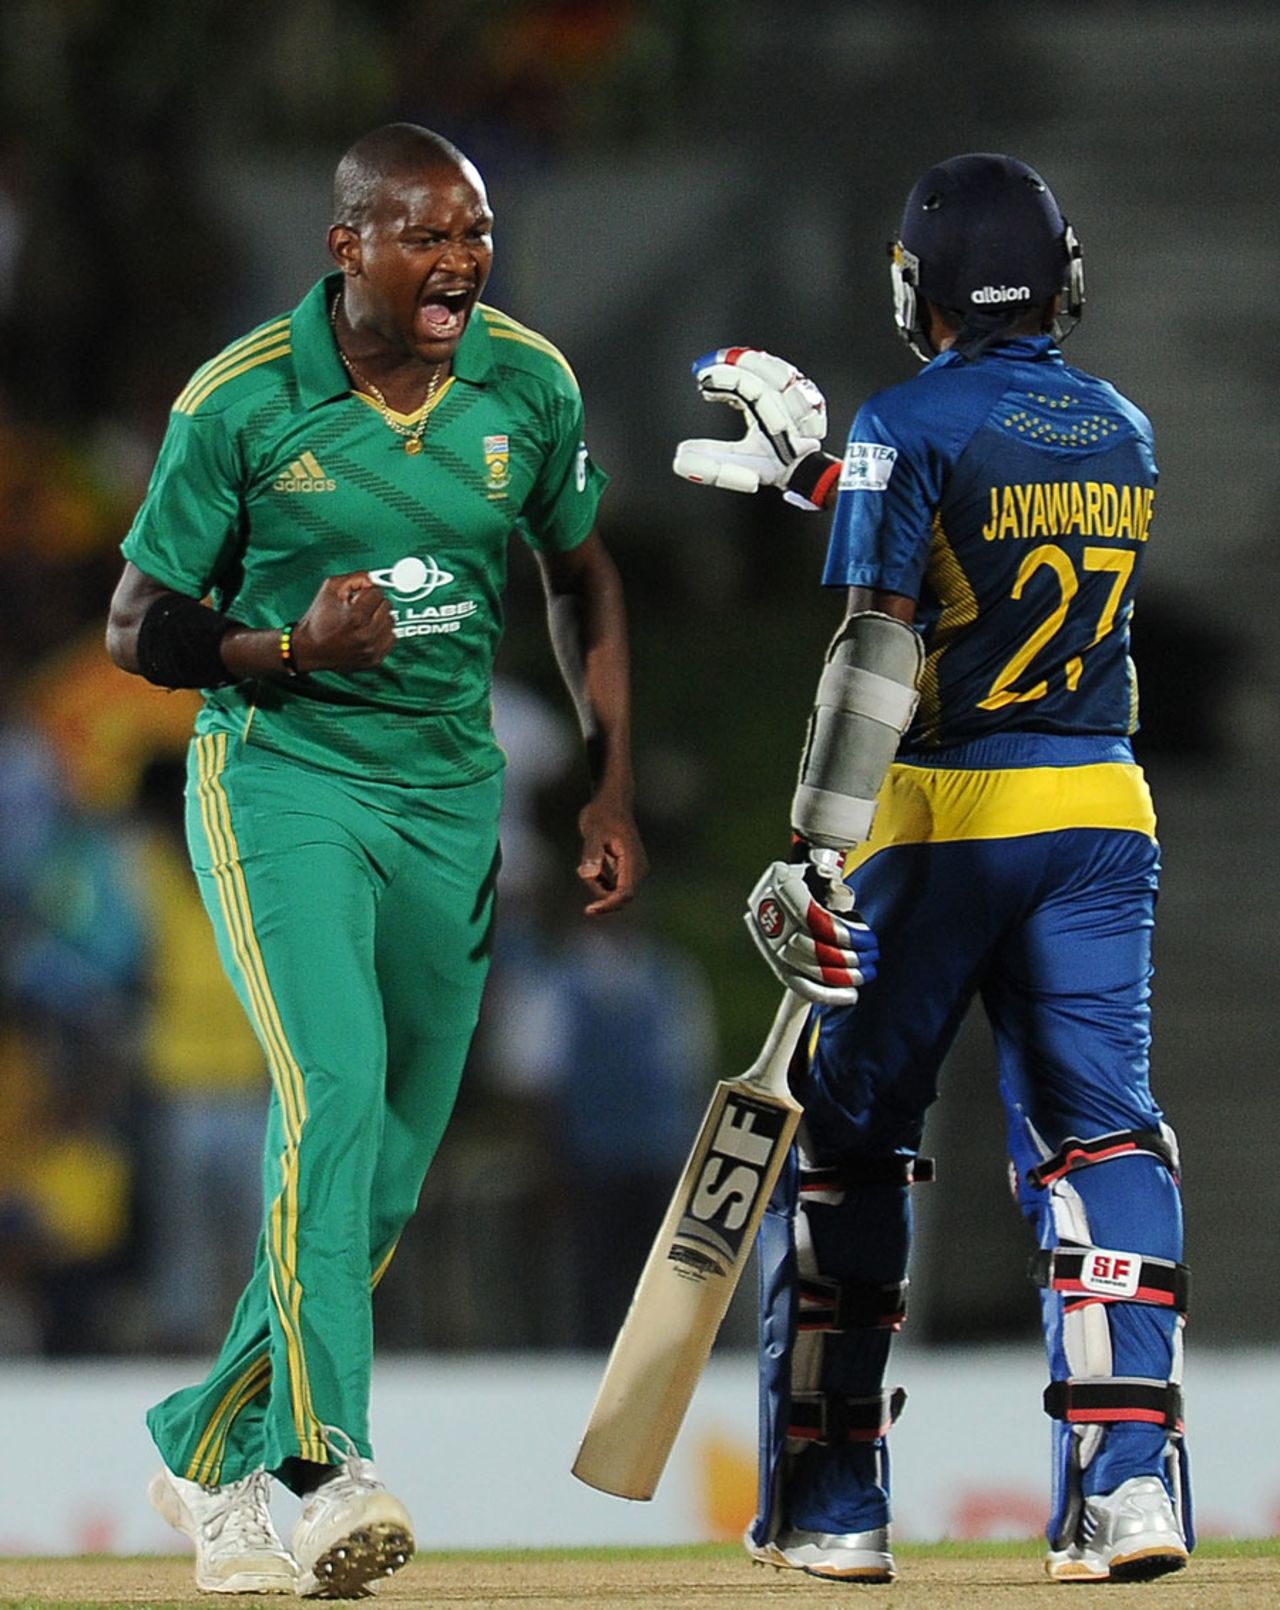 Lonwabo Tsotsobe is pumped up after dismissing Mahela Jayawardene, Sri Lanka v South Africa, 2nd T20I, Hambantota, August 4, 2013